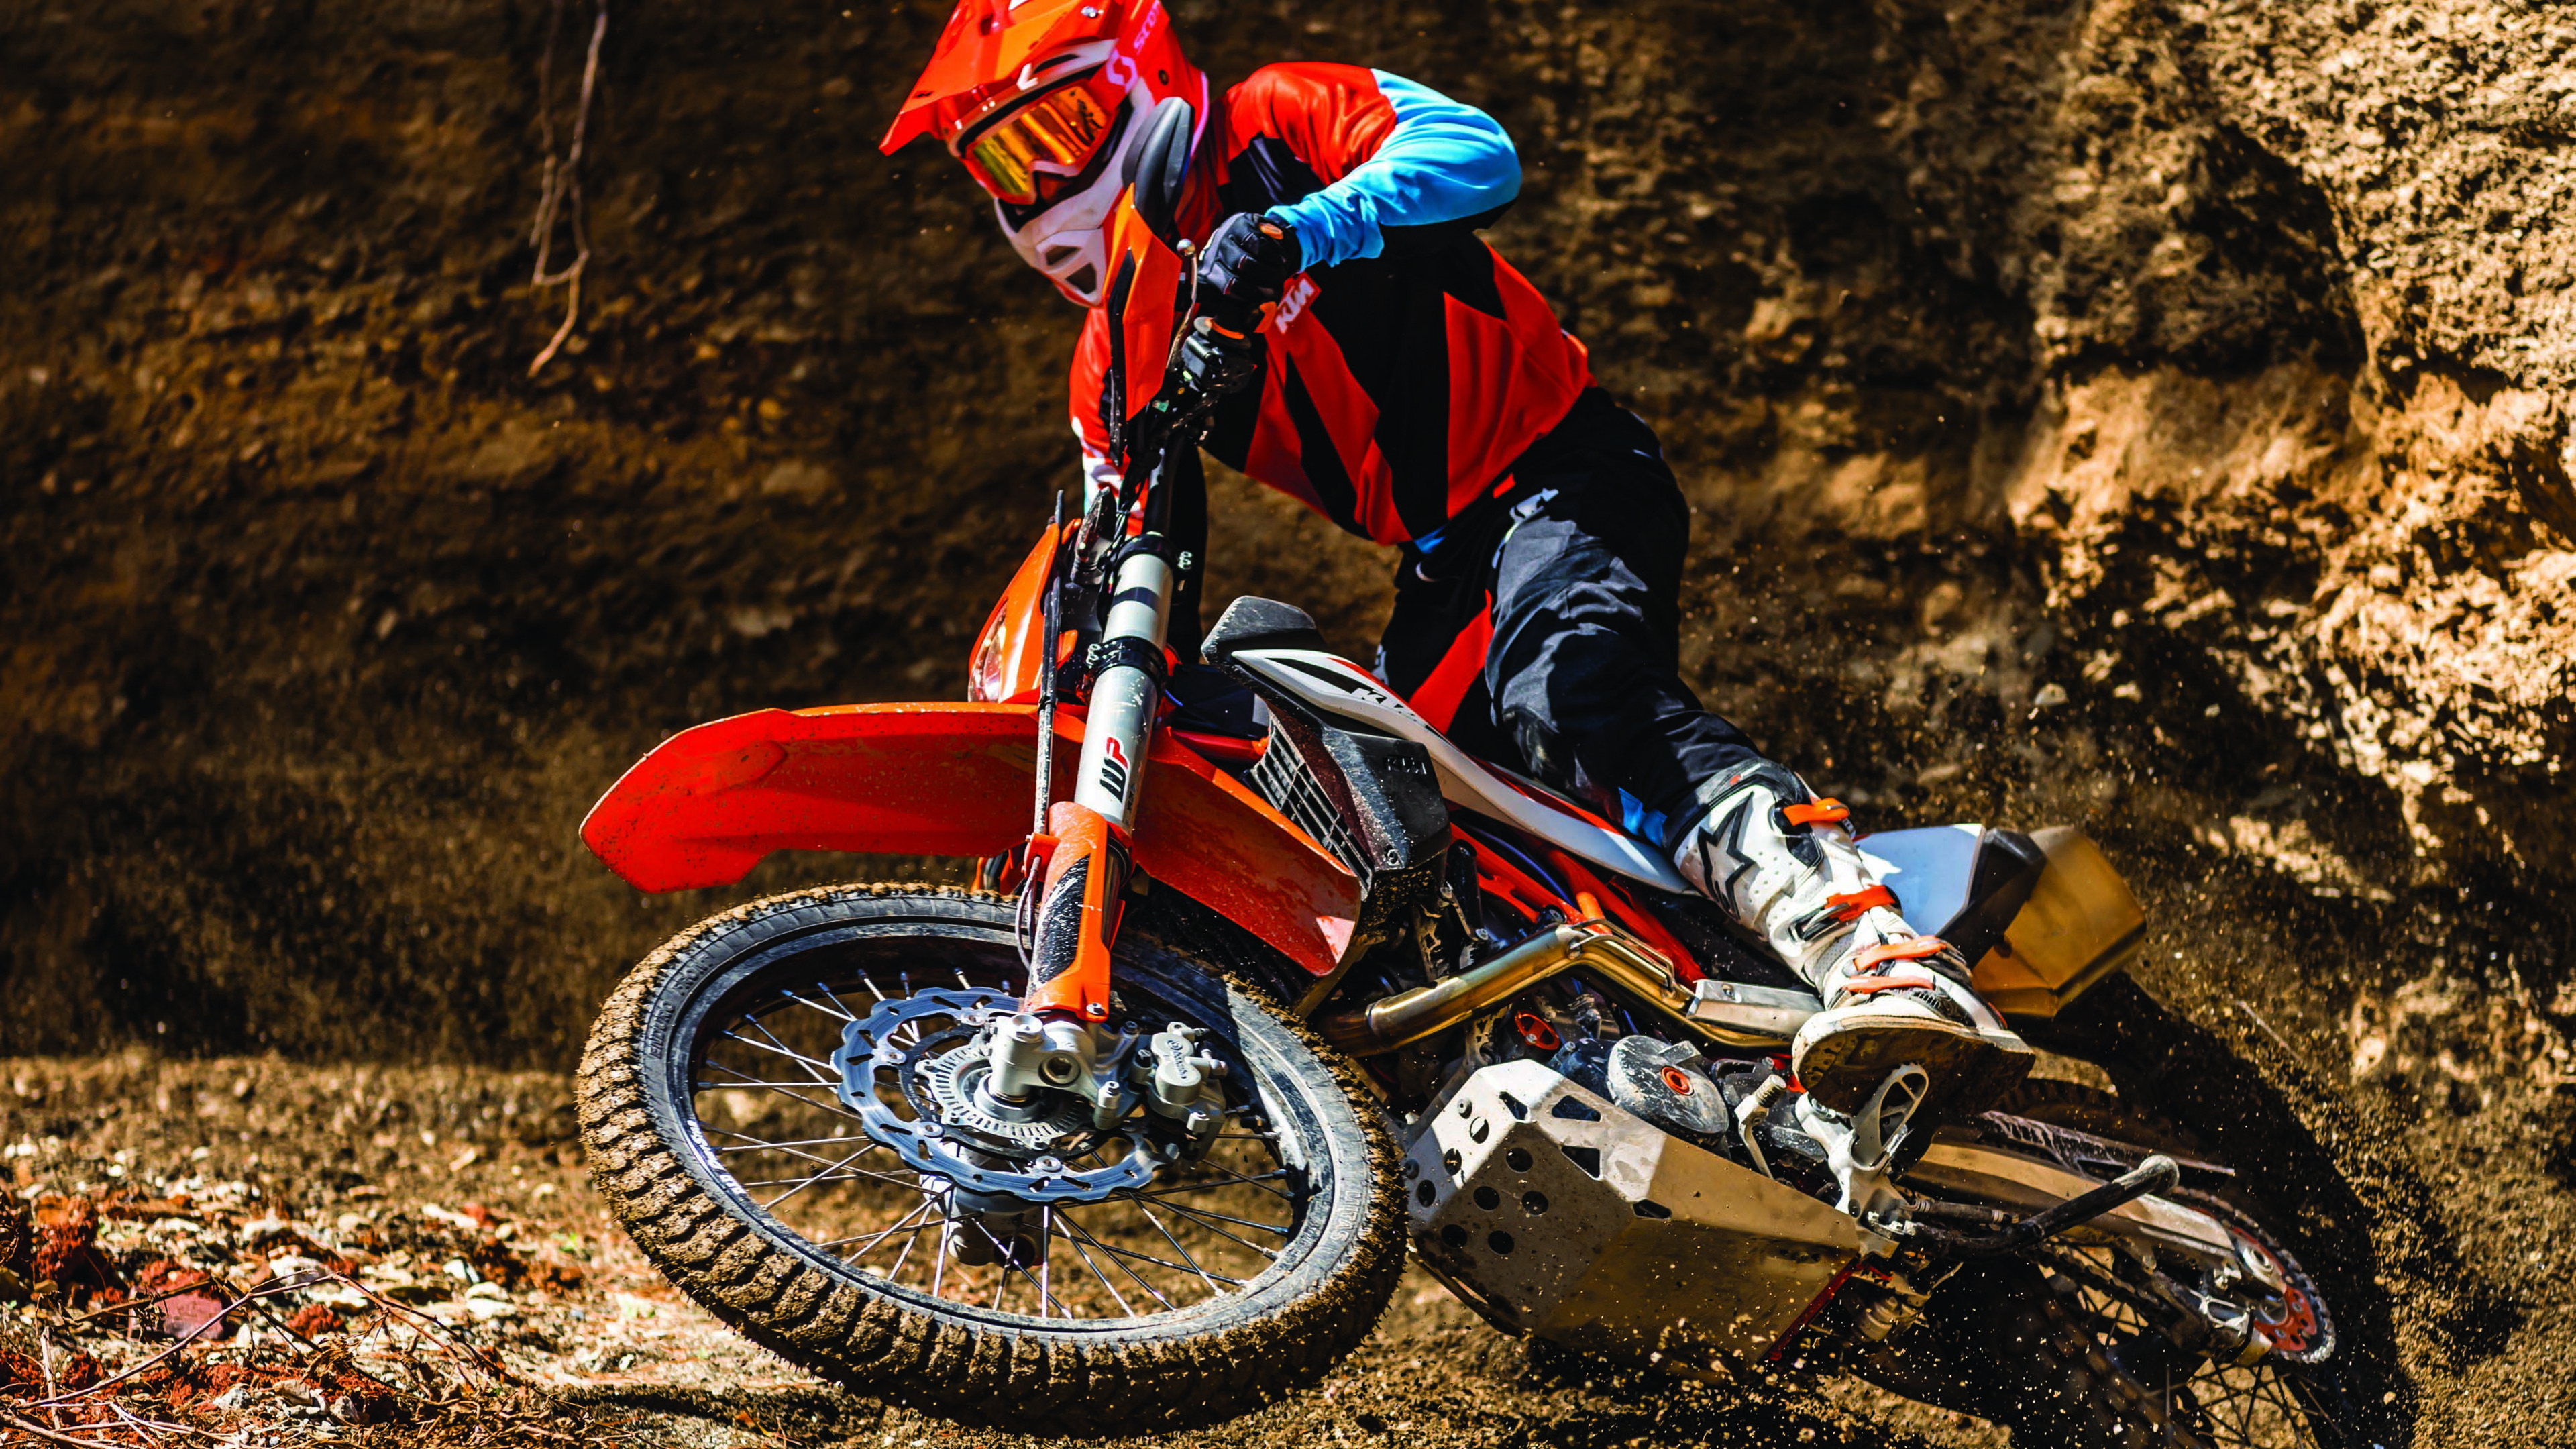 KTM Dirt Bike, Enduro wallpaper, High-quality backgrounds, 3840x2160 4K Desktop